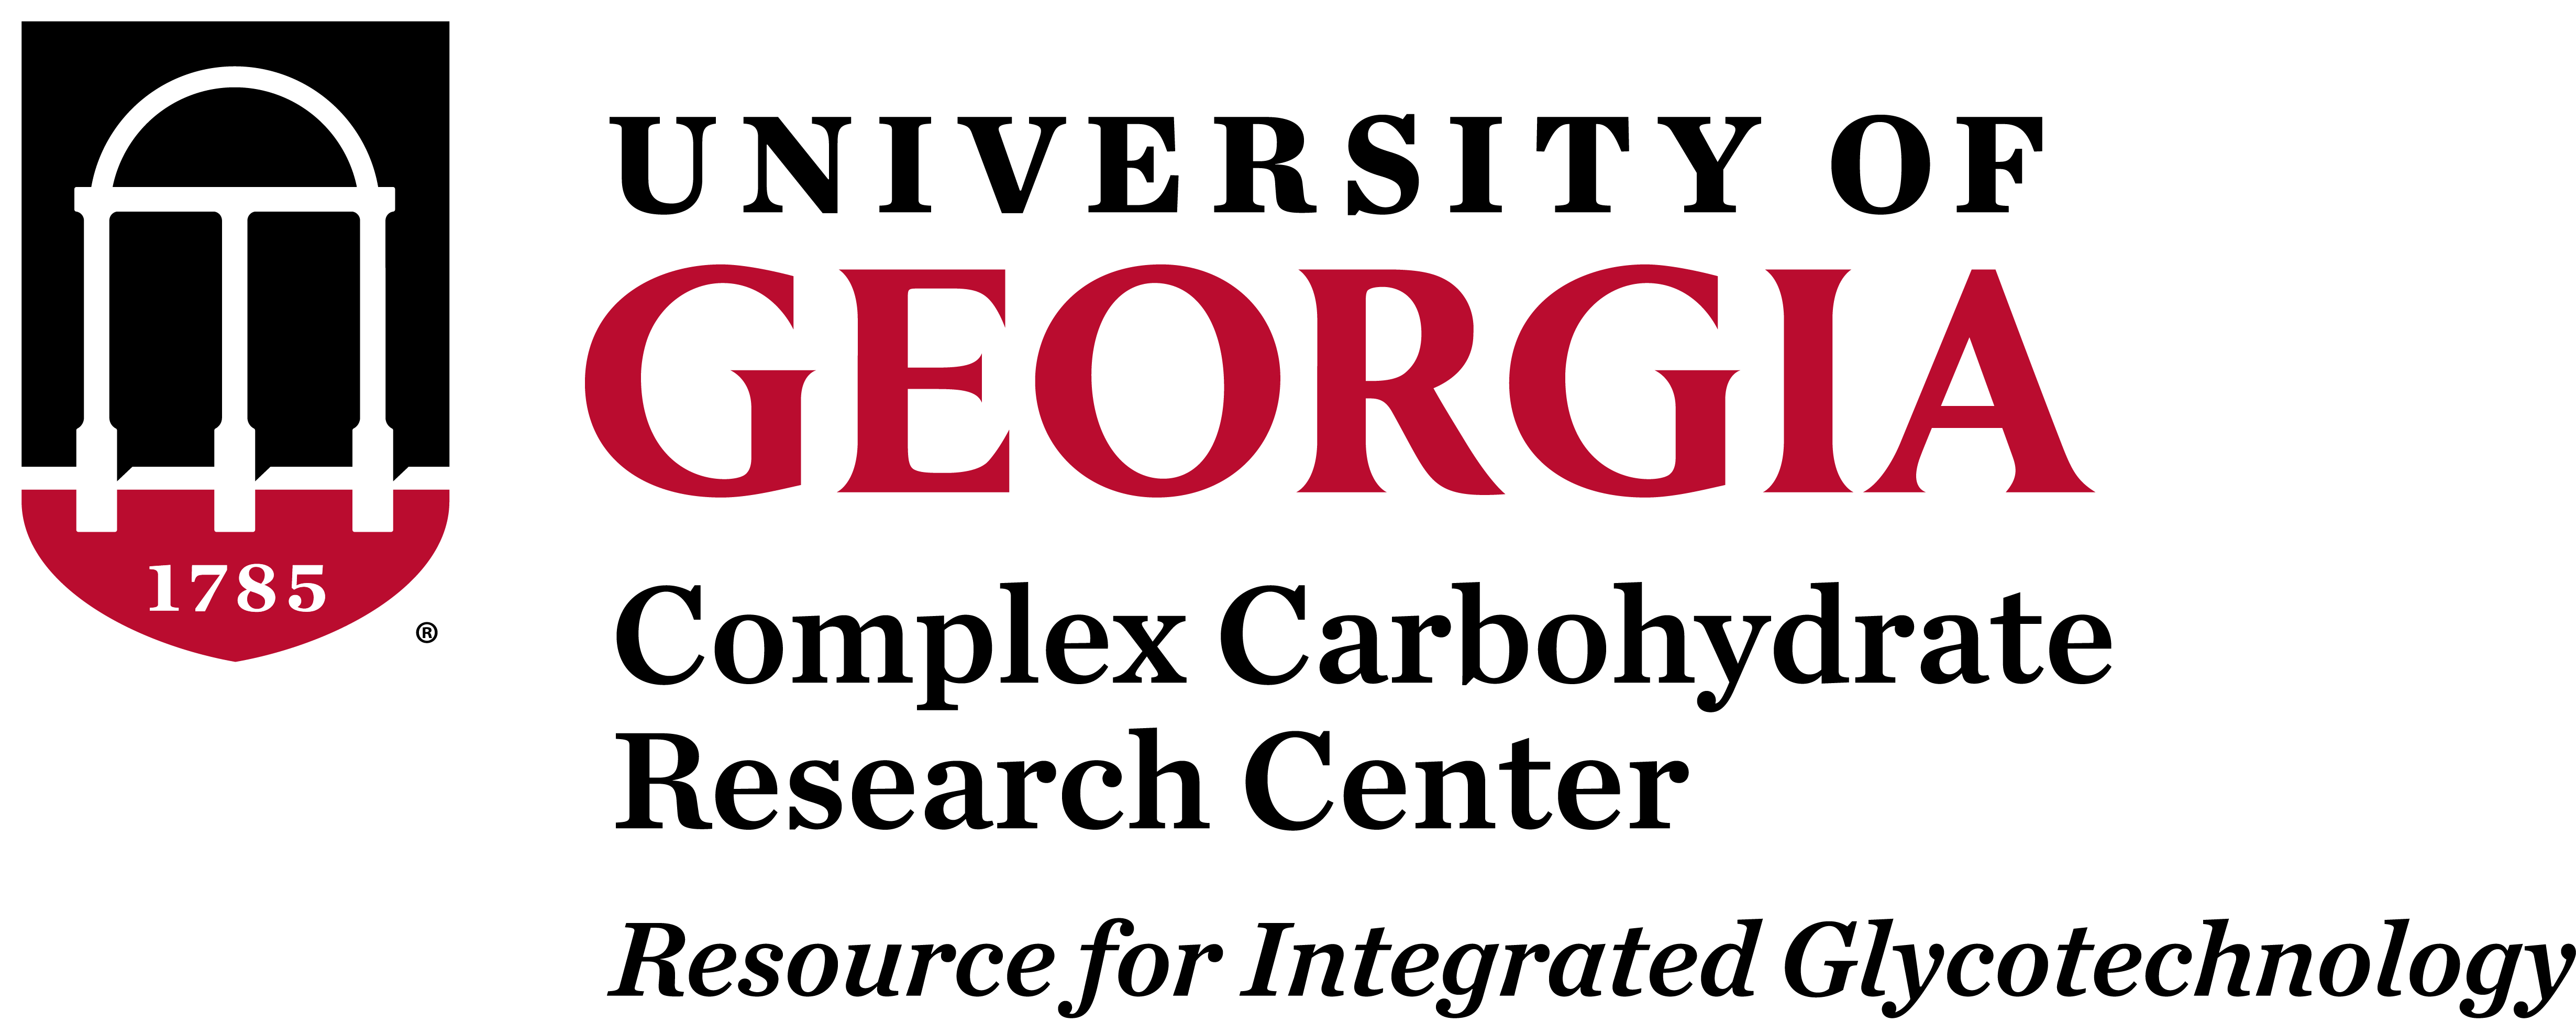 University of Georgia Resource-Integrated-Glycotechnology